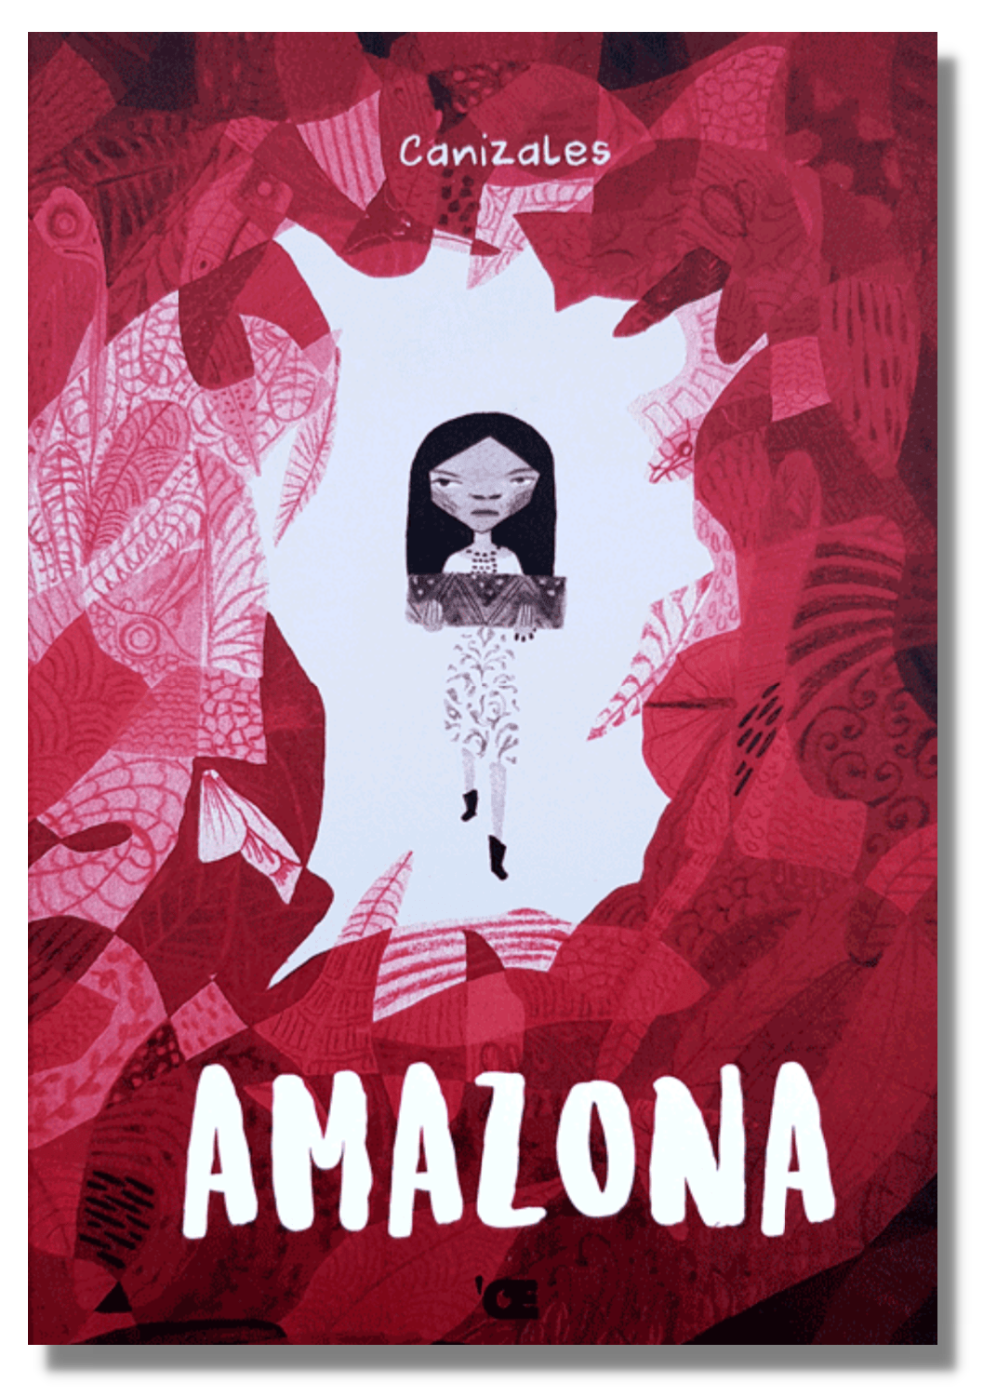 The cover of "Amazona"